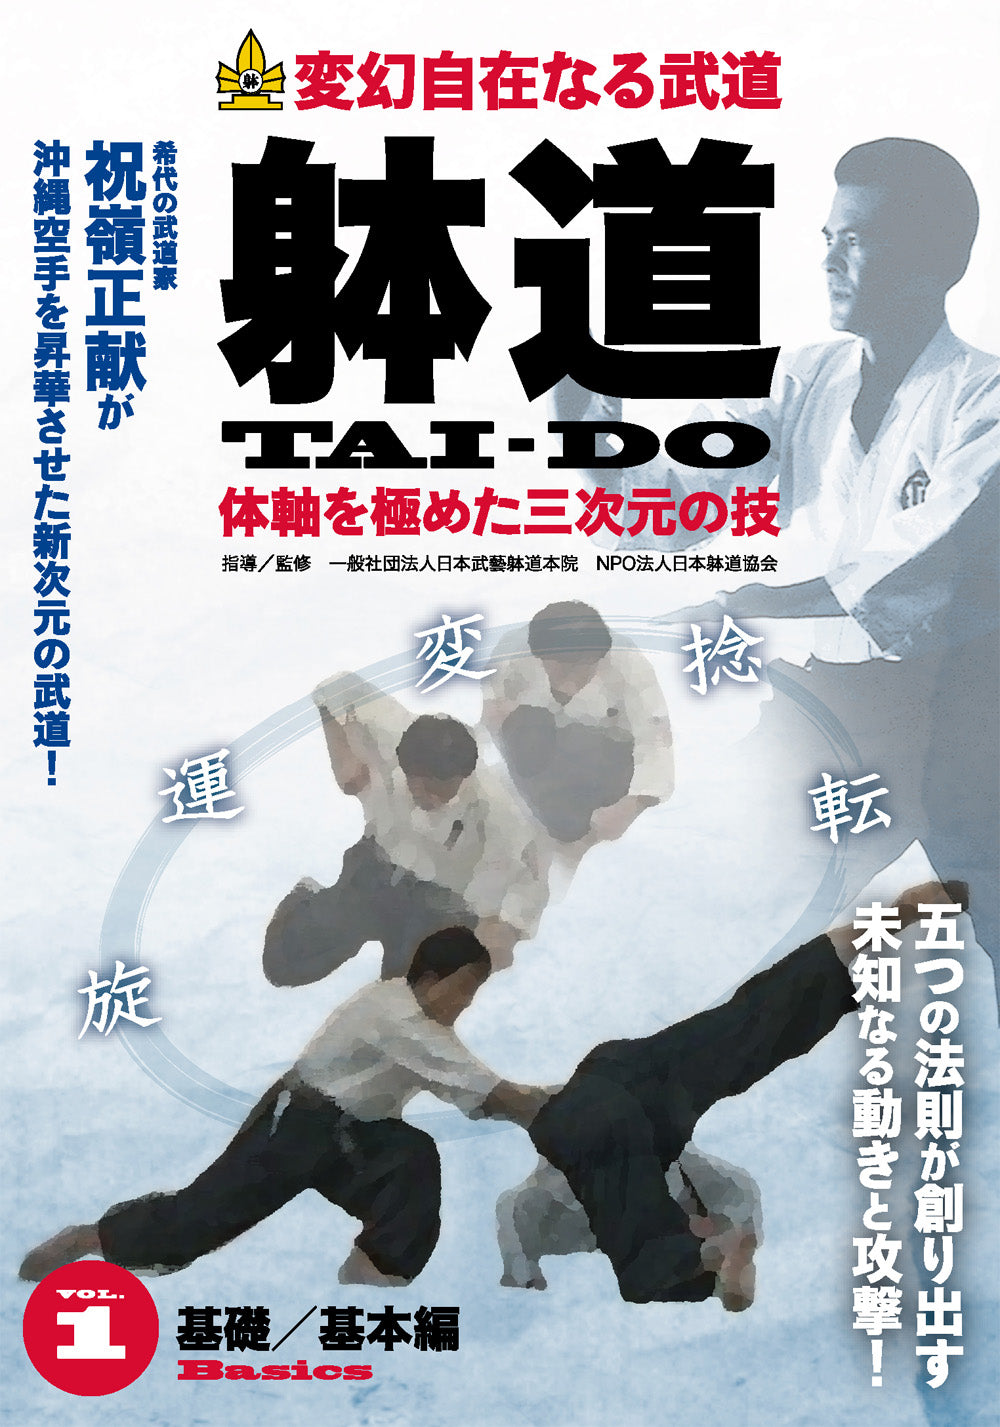 Taido DVD 1: Basics by Seiken Shukumine